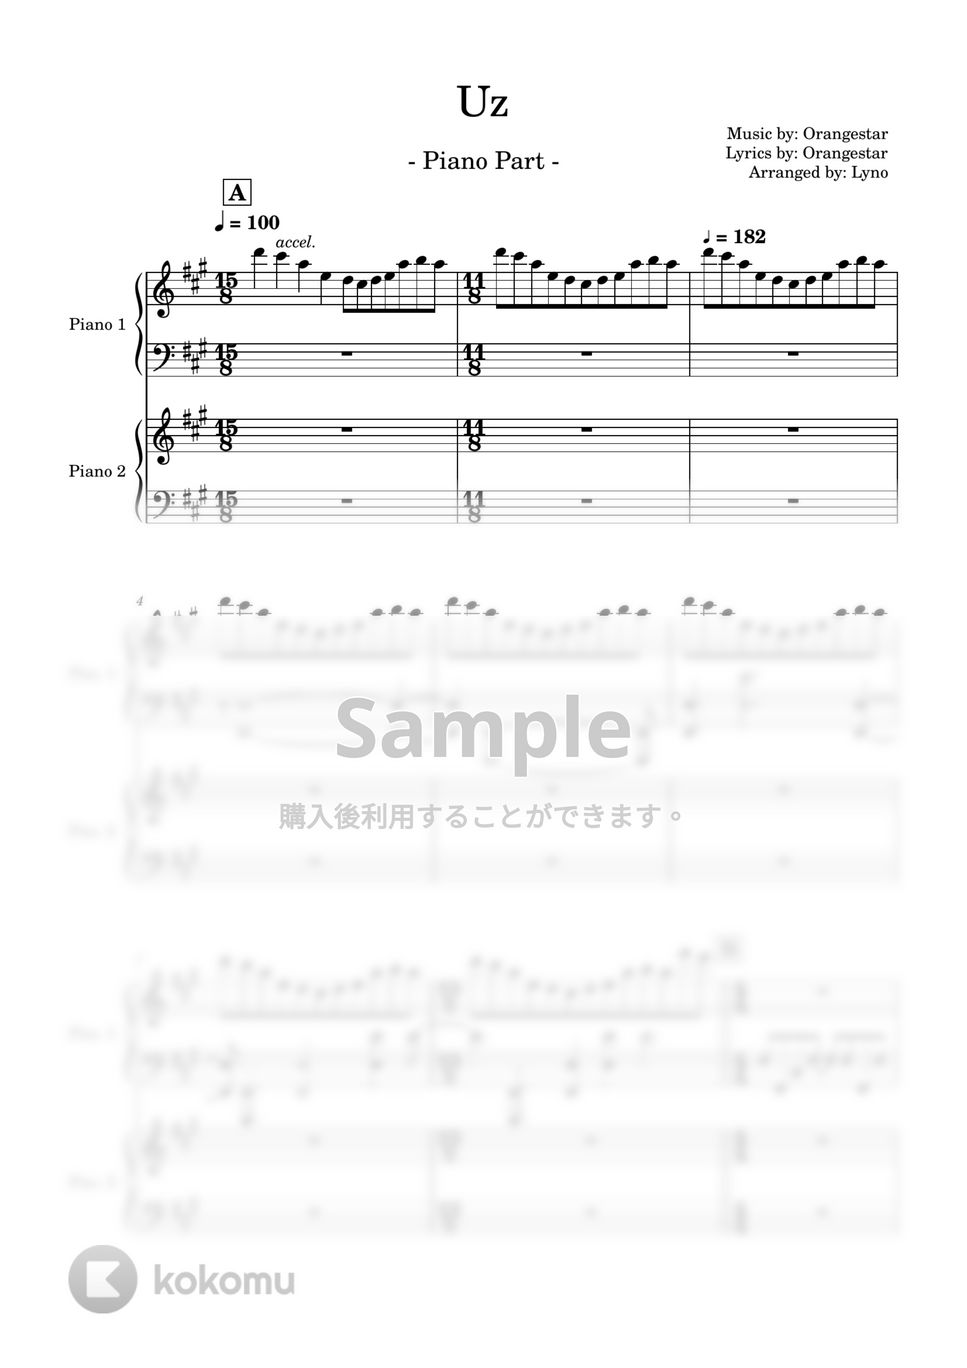 Orangestar - Uz (ピアノパート譜) by Ray